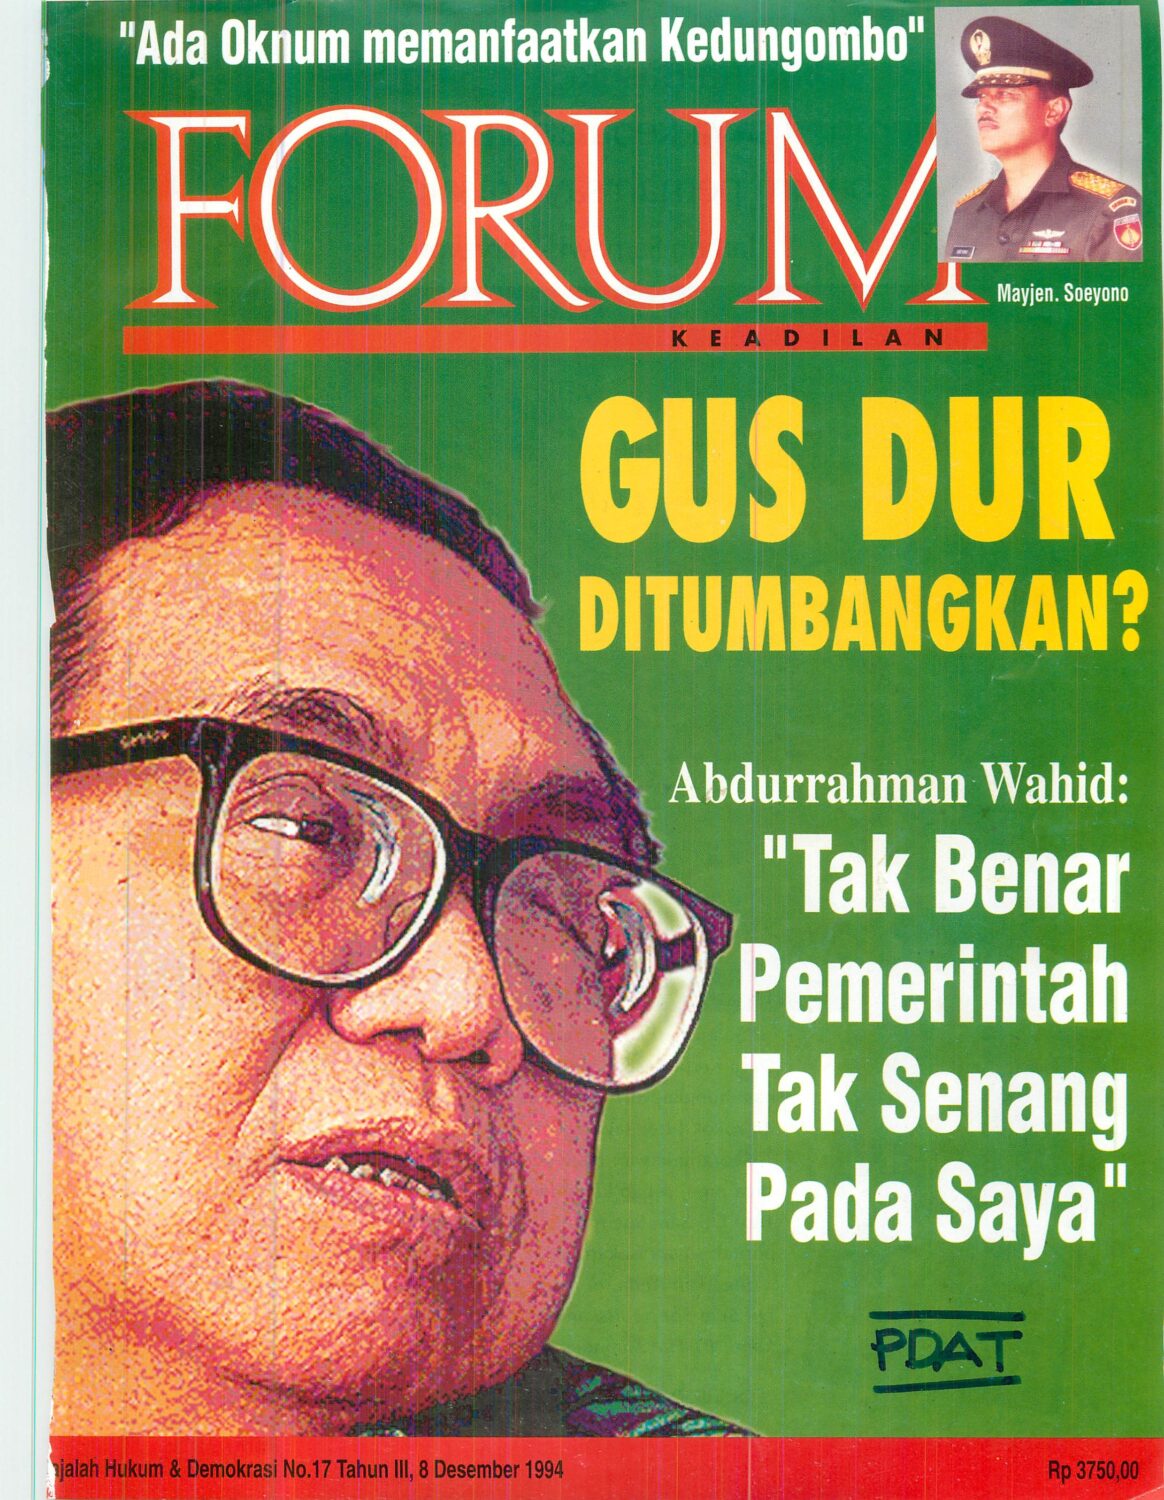 Forum Keadilan, 8 Desember 1994